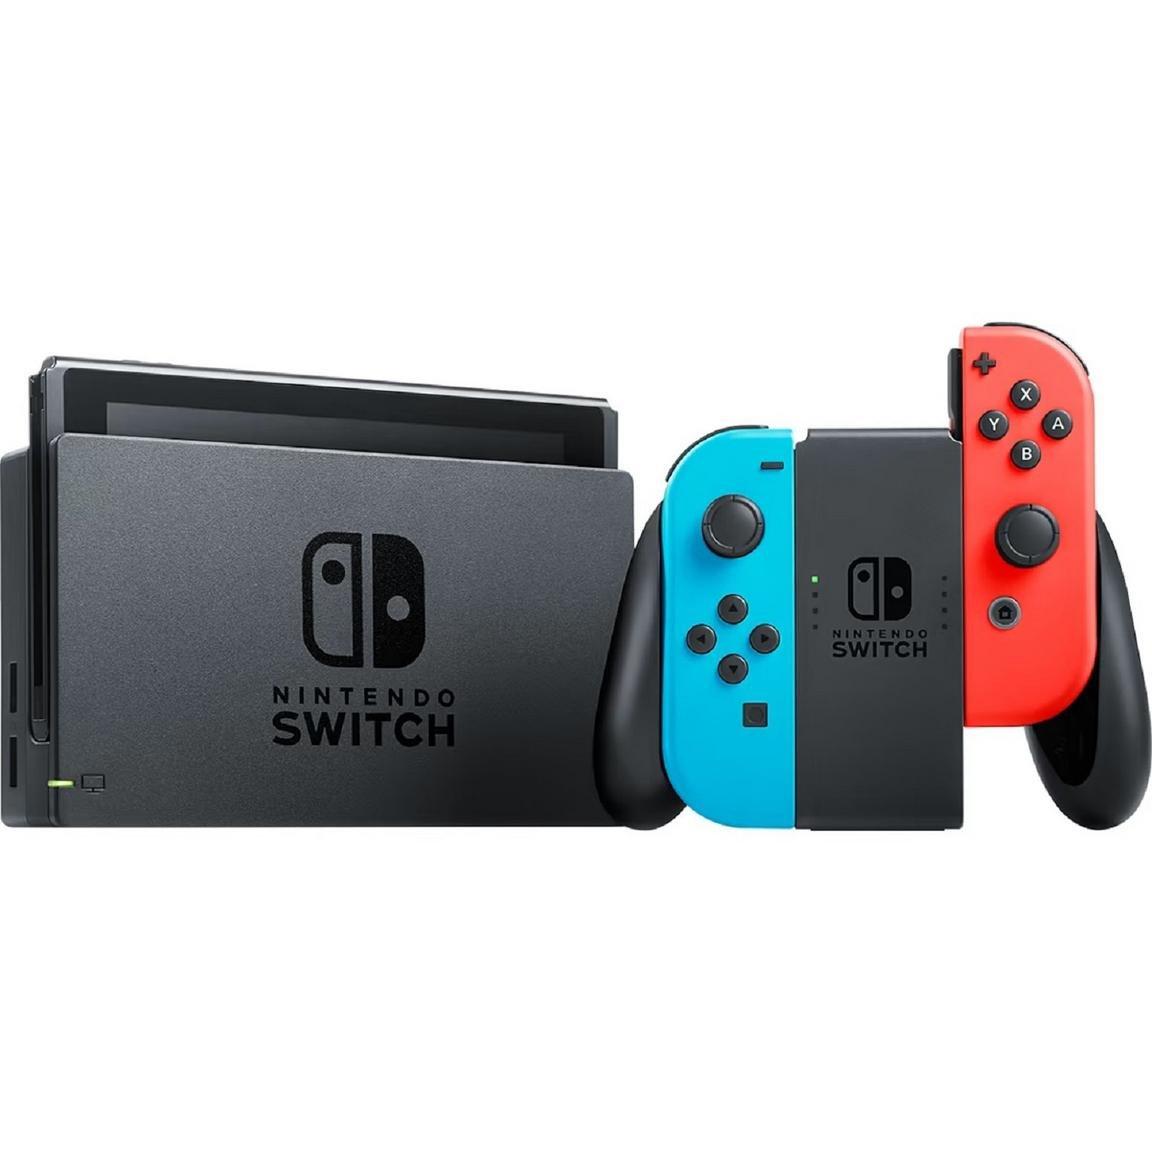 Nintendo Switch 6 items Bundle:Nintendo Switch 32GB Console Gray  Joy-con,128GB Micro SD Memory Card, Nintendo Joy-Con (L/R) Wireless  Controllers